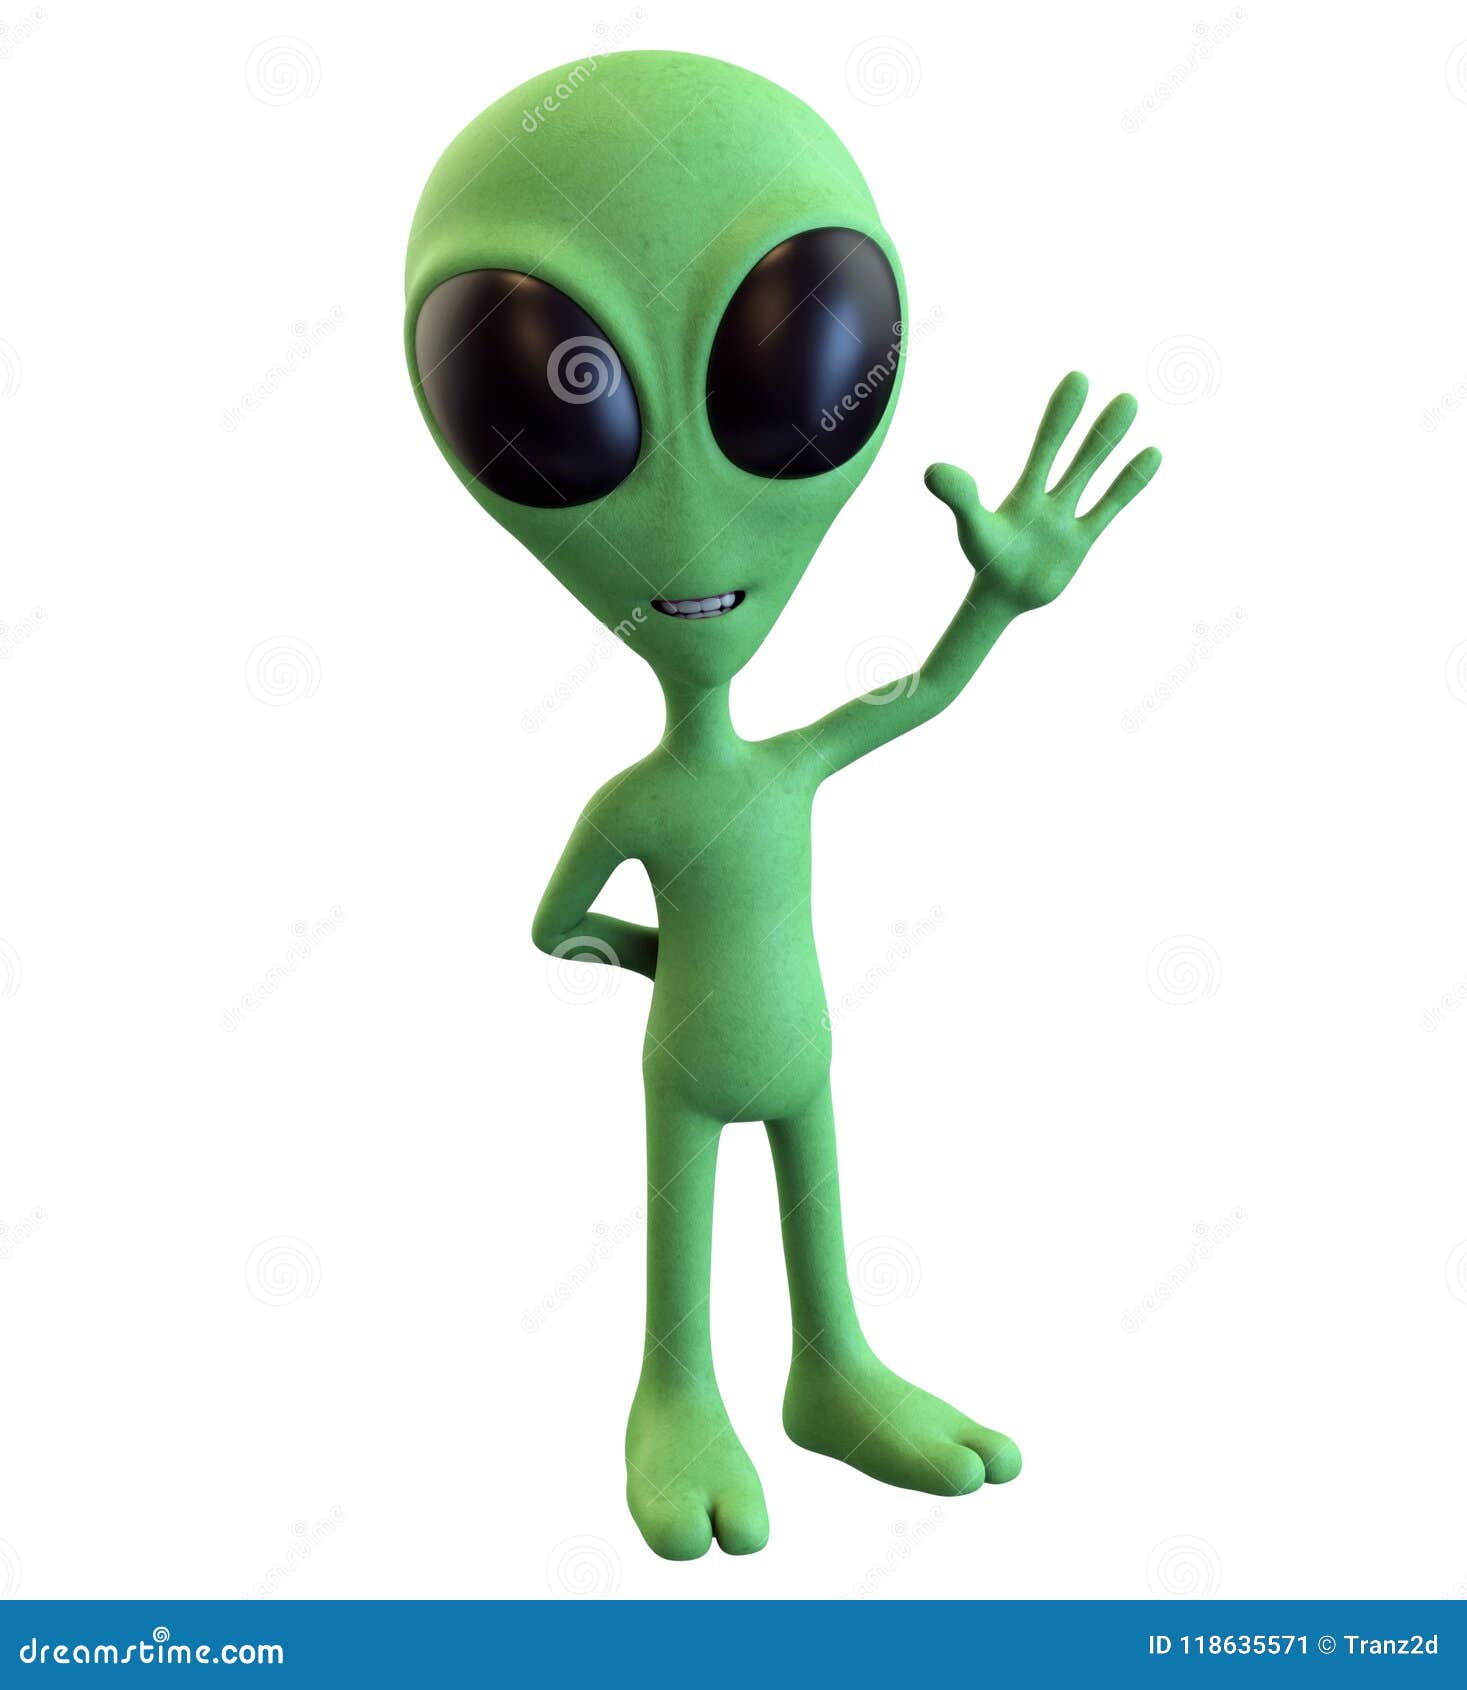 green cartoon alien waving